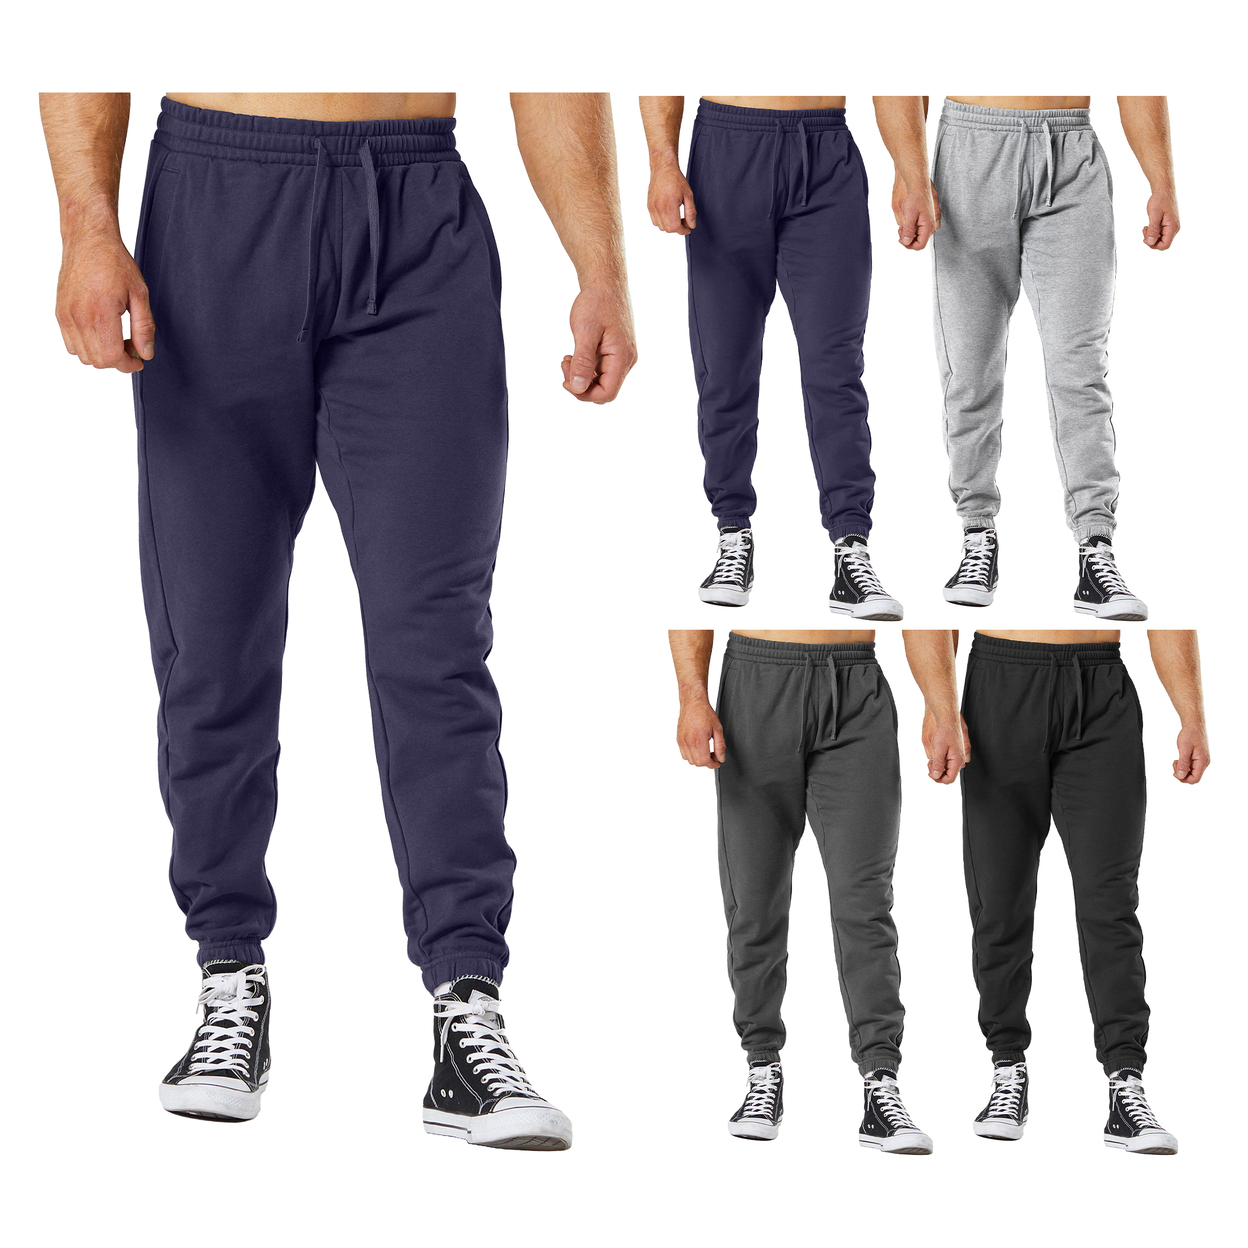 3-Pack: Men's Ultra-Soft Cozy Winter Warm Casual Fleece-Lined Sweatpants Jogger - Large